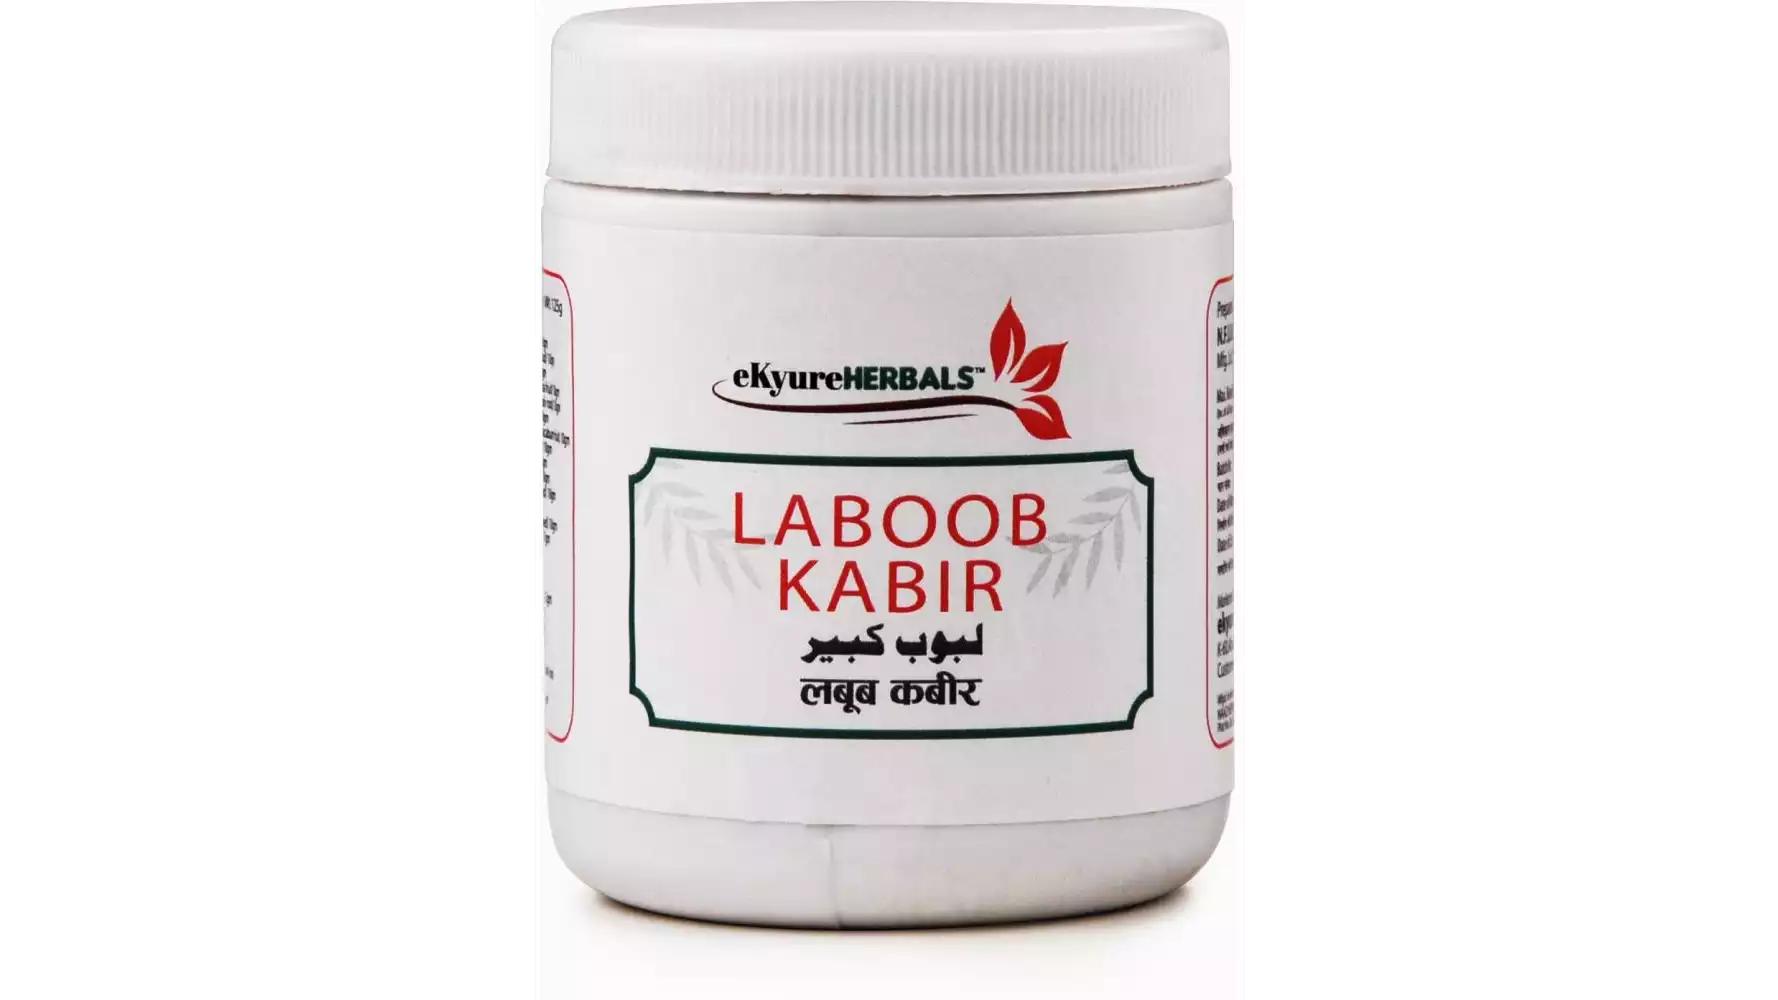 Ekyure Herbals Laboob Kabir (125g)